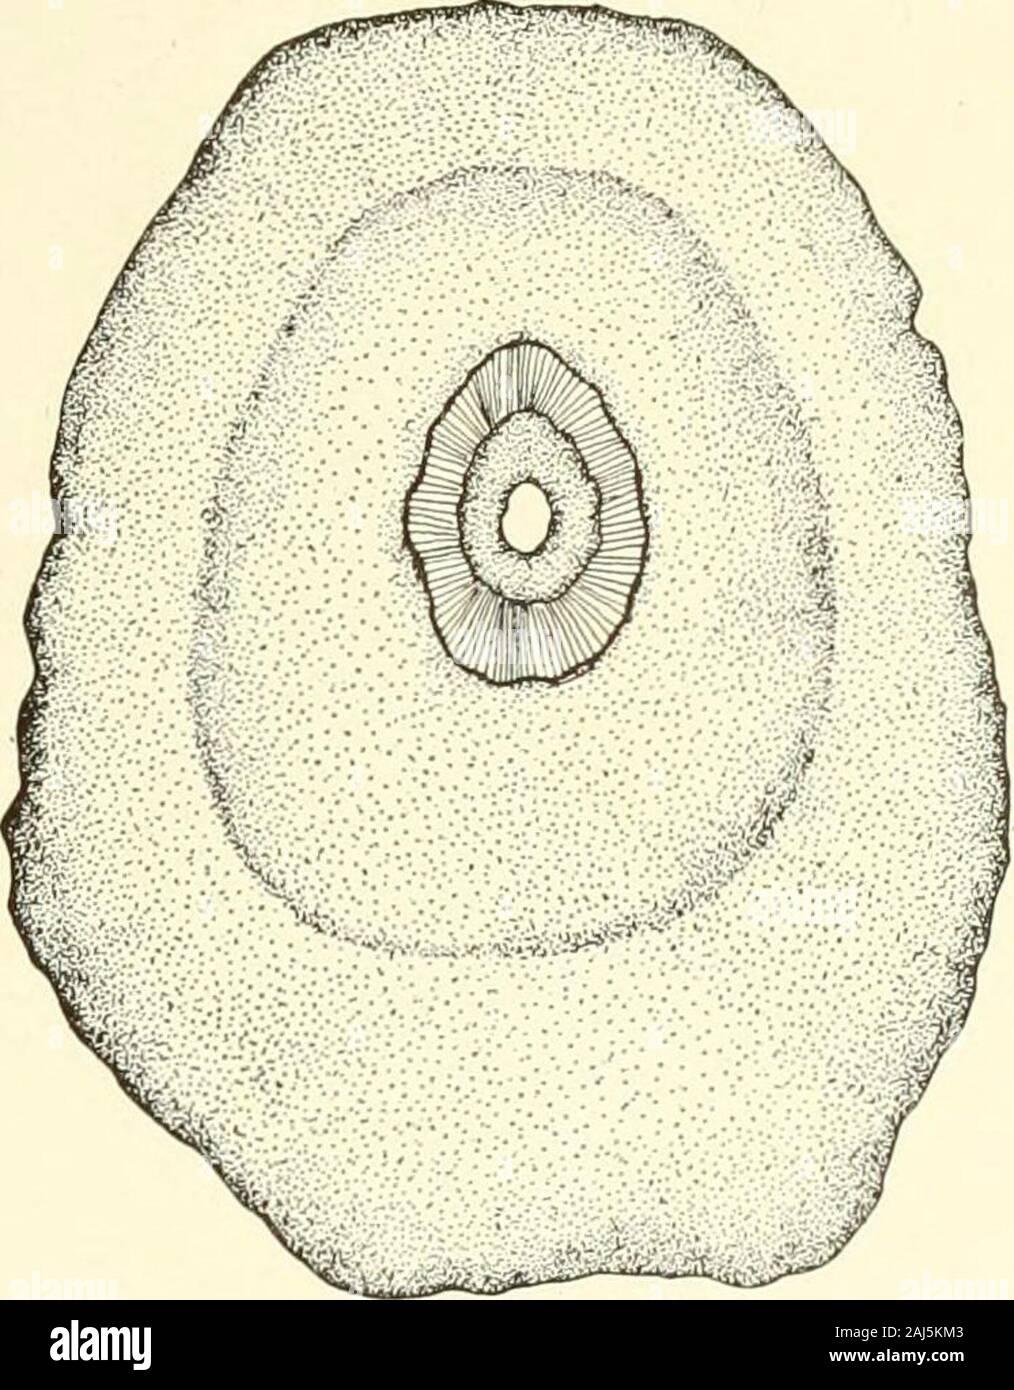 Journal of Entomology and Zoology . Some of tlic niulil)riiii(li iiiolhisrs foiiiul at Laguiia. A, Laila cockerclli; B,Chromodorig porlerae; C, (hromodorin sp. (mantel removed); D, Chromodoris sp.;E, Cicnus?; F, Aefjire.t alhojniiirldtiis; G, Anrula parifird; 11, Cuthnnla sp.; I,Jlirrid ,s|).; J, llertninxendii oiHdexcom; K, xpnrUla s]). Irom Ciiieriisey, first Lagunareport. JOURNAL OF ENTOMOLOGY AND ZOOLOGY 219 within a limited range. The octopus Polypus bimaculatiis isabundant along the rocky shore and may be obtained at low tide.The sand, the rocks and the sea weeds are alive in many places Stock Photo